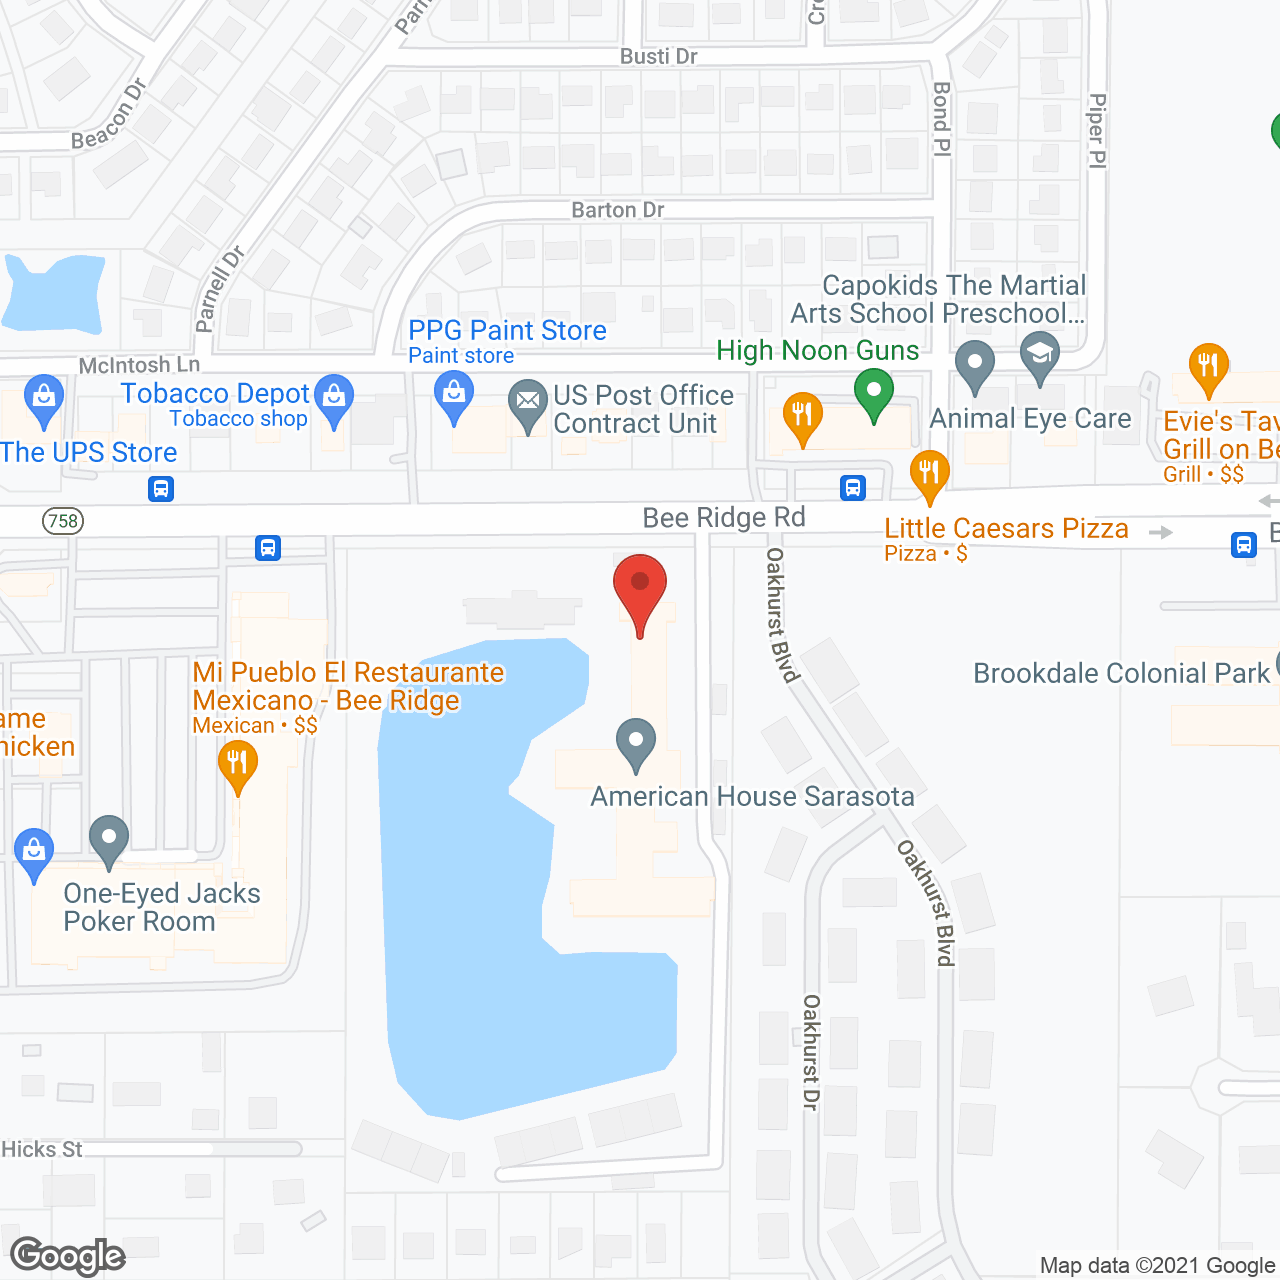 American House Sarasota in google map